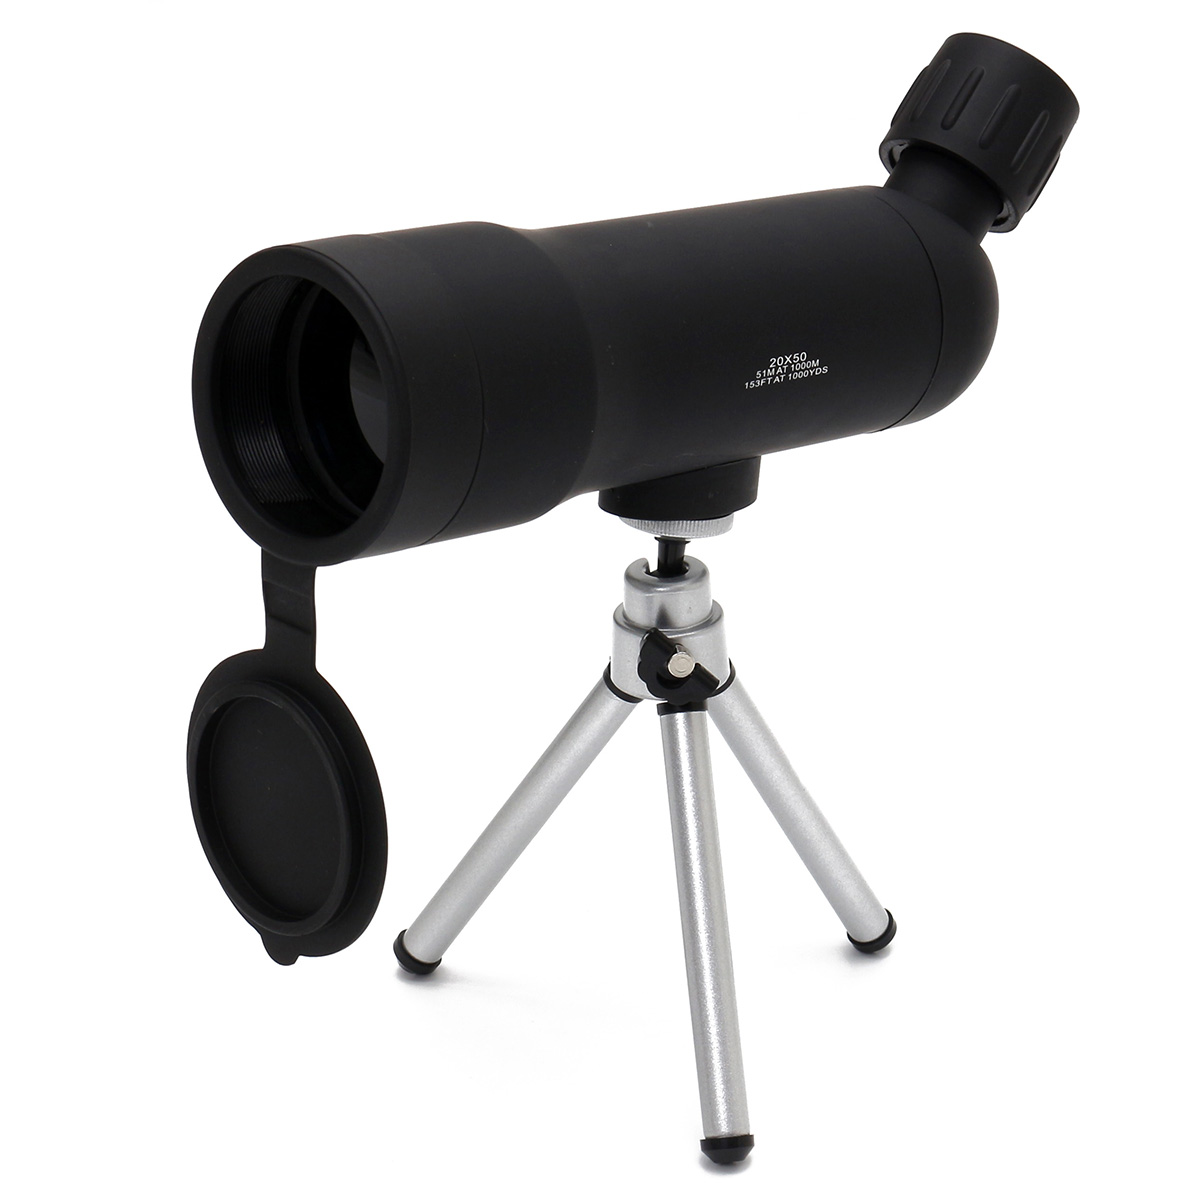 

IPRee™ 20x50 Portable Monocular HD Viewing Lens Telescope Spotting Scope Night Vision